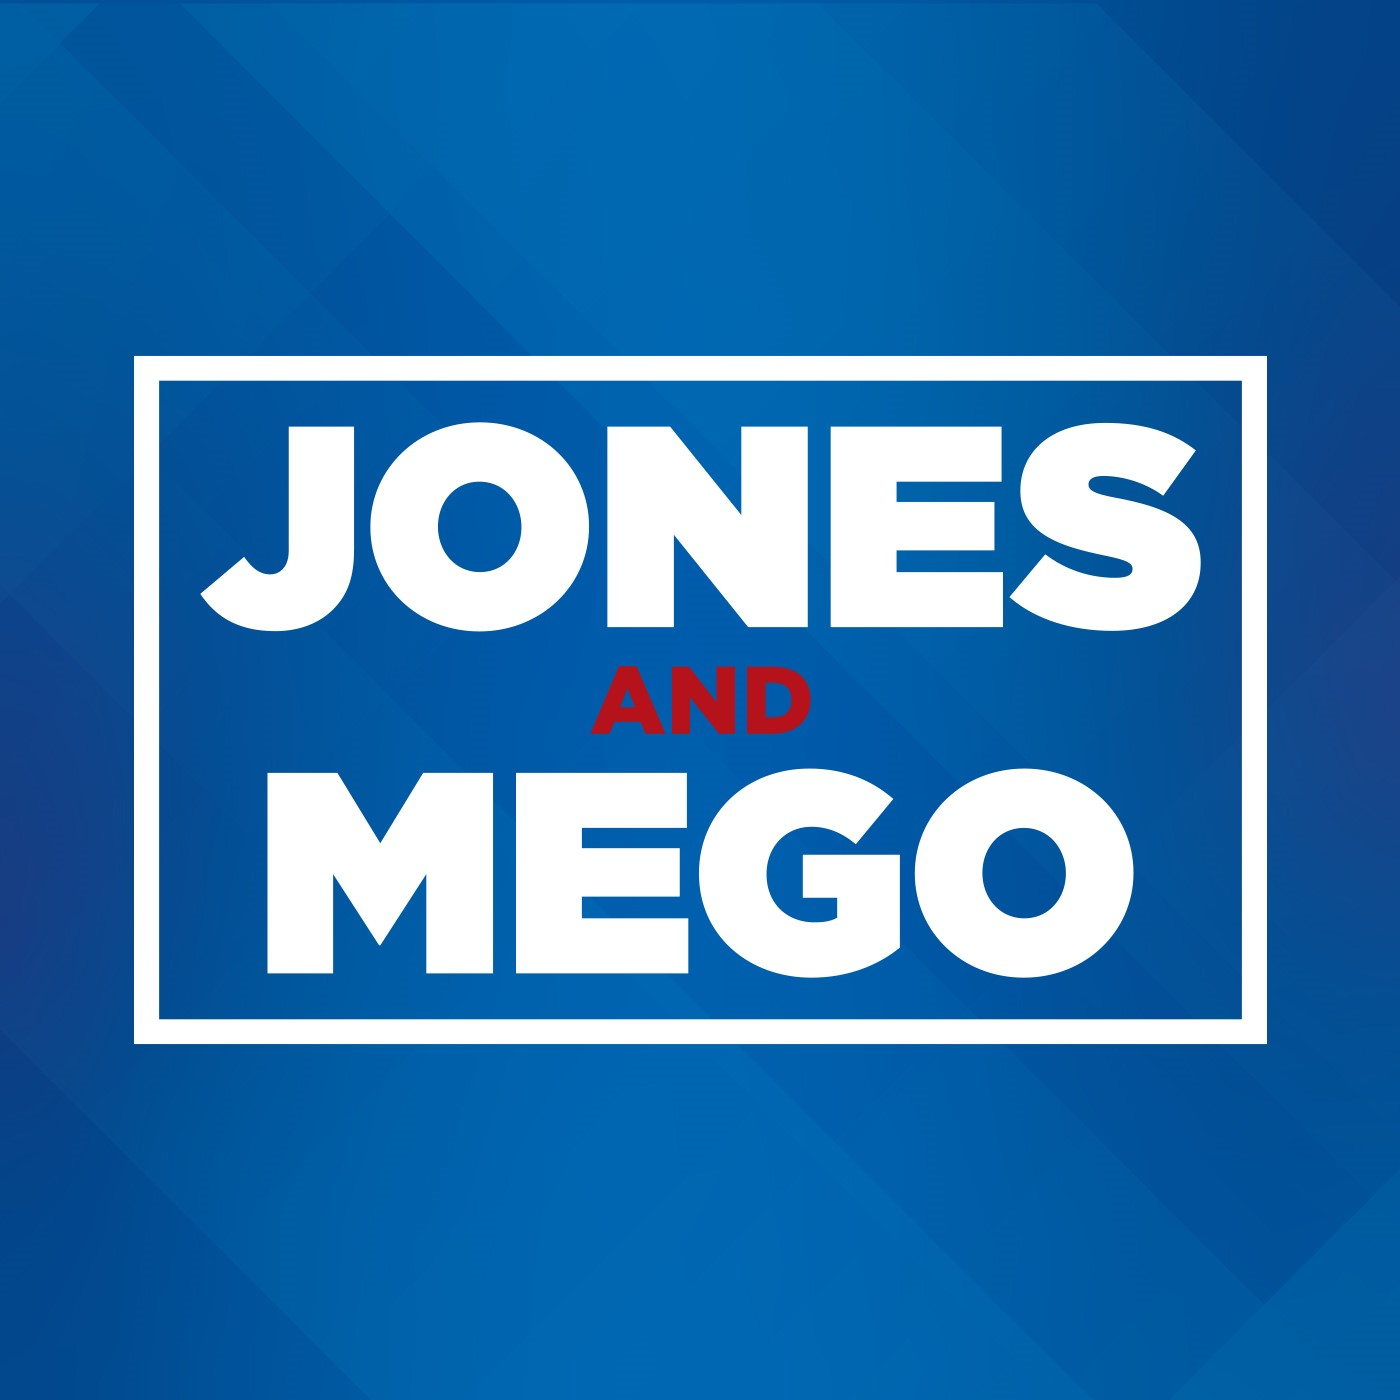 Jones and Mego argue about the Patriots' offensive line